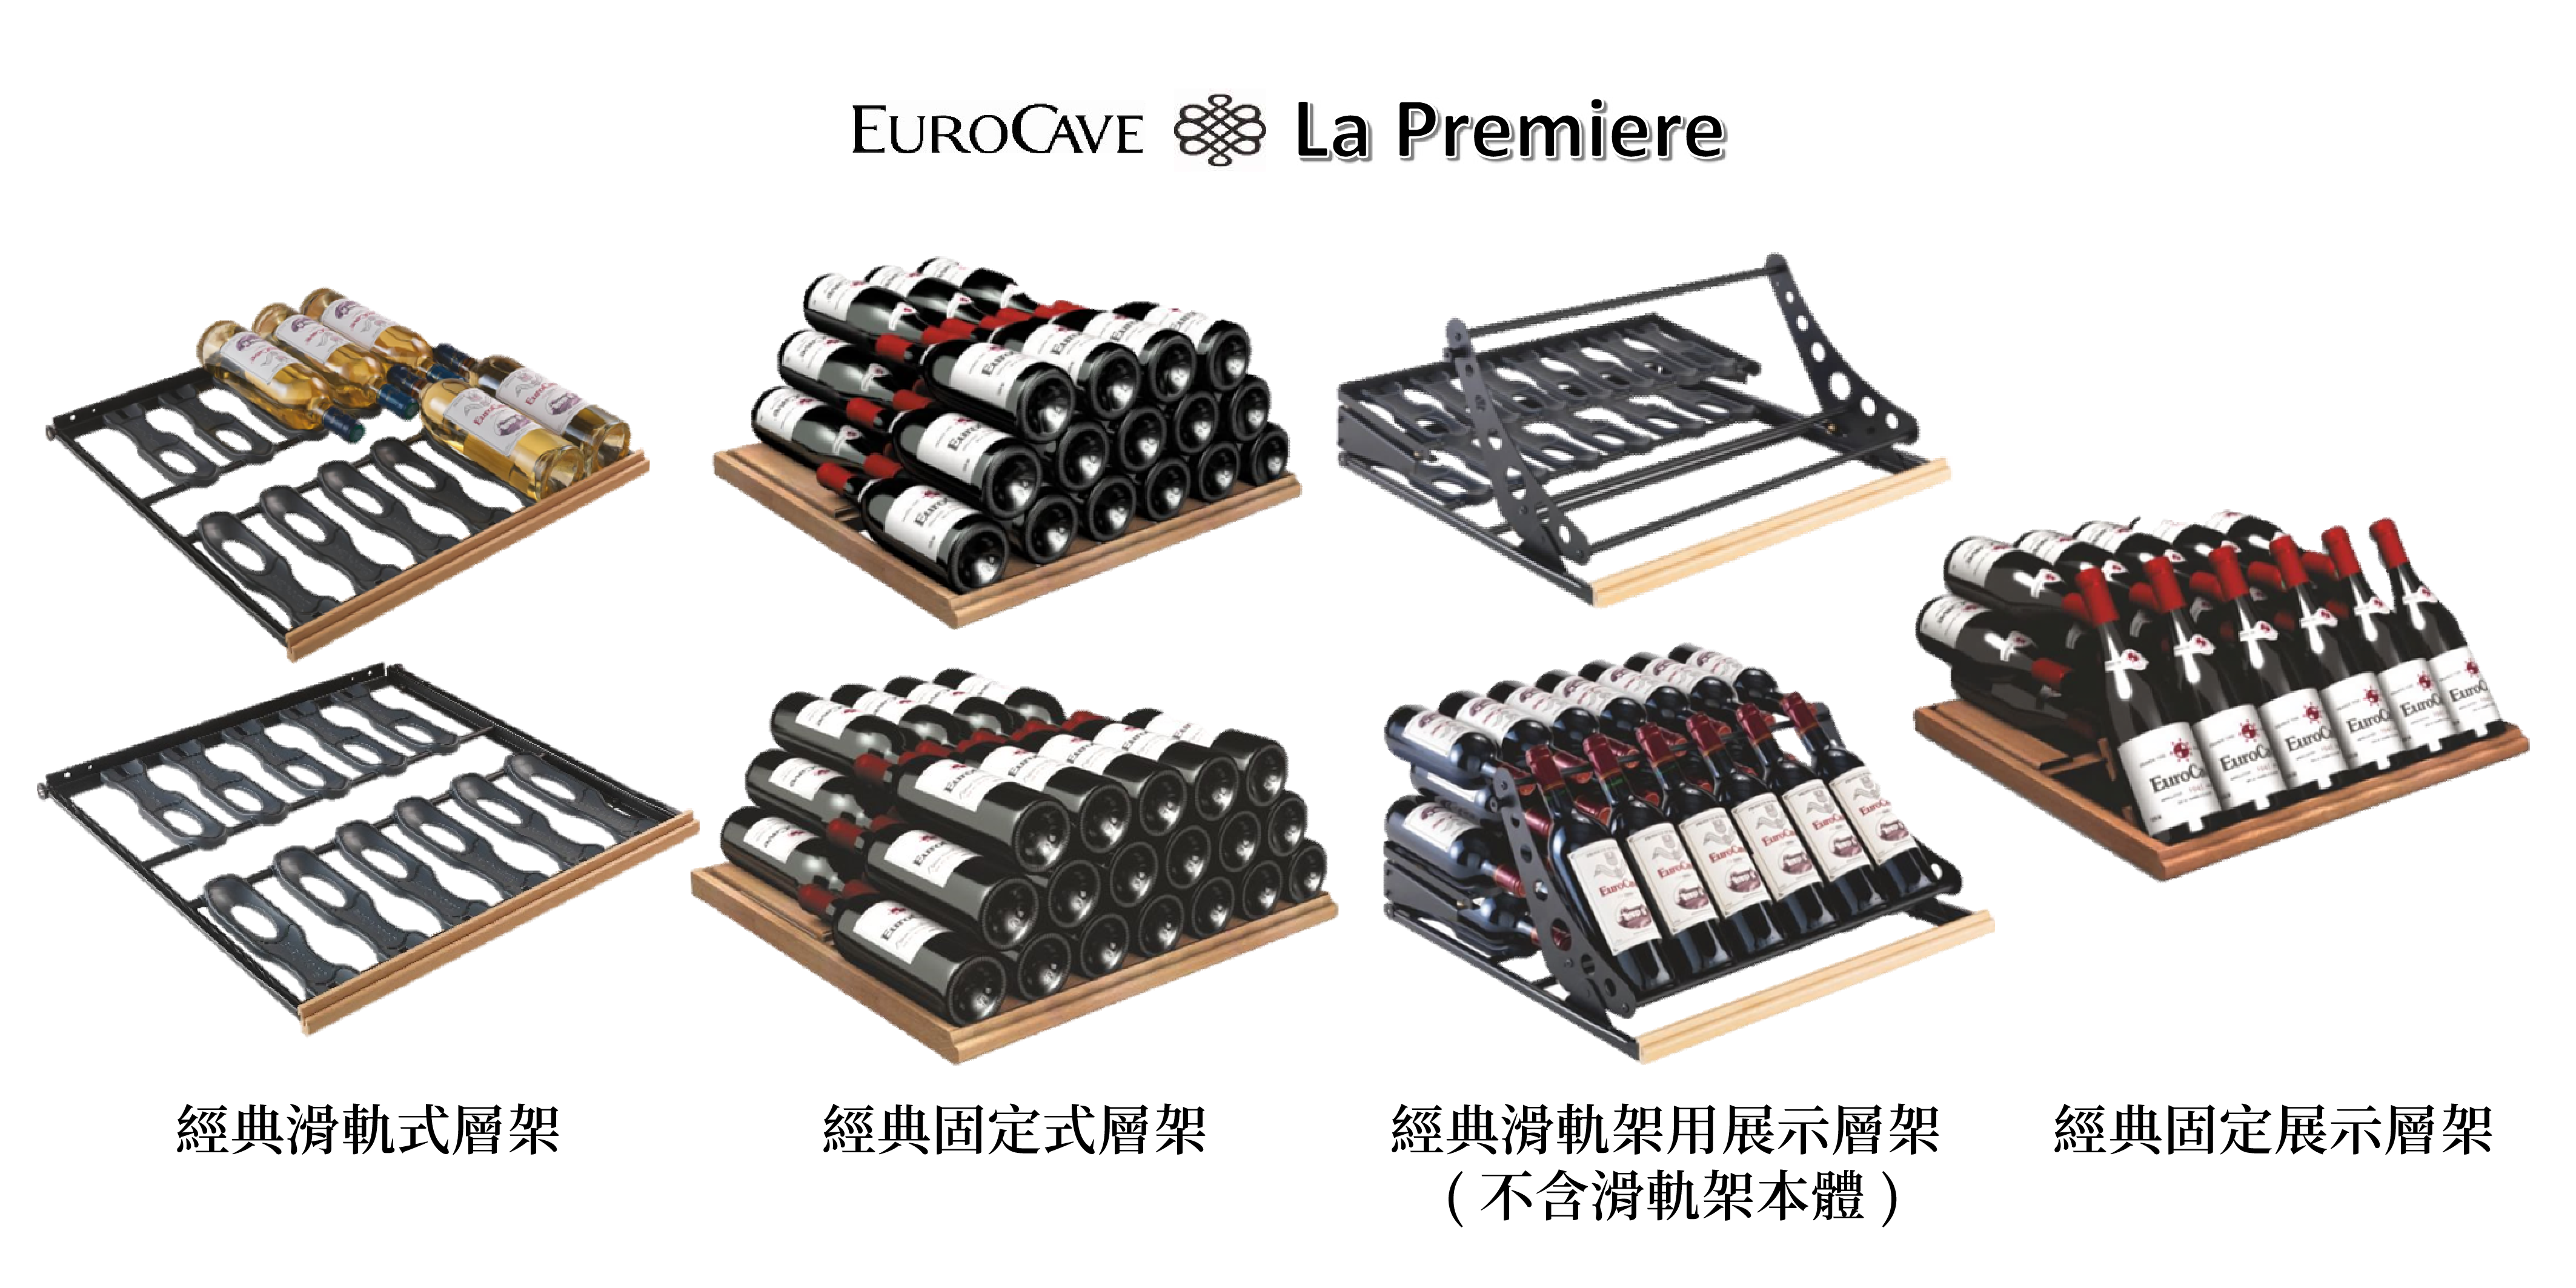 bacchus-EuroCave-La-Premiere-Accessories